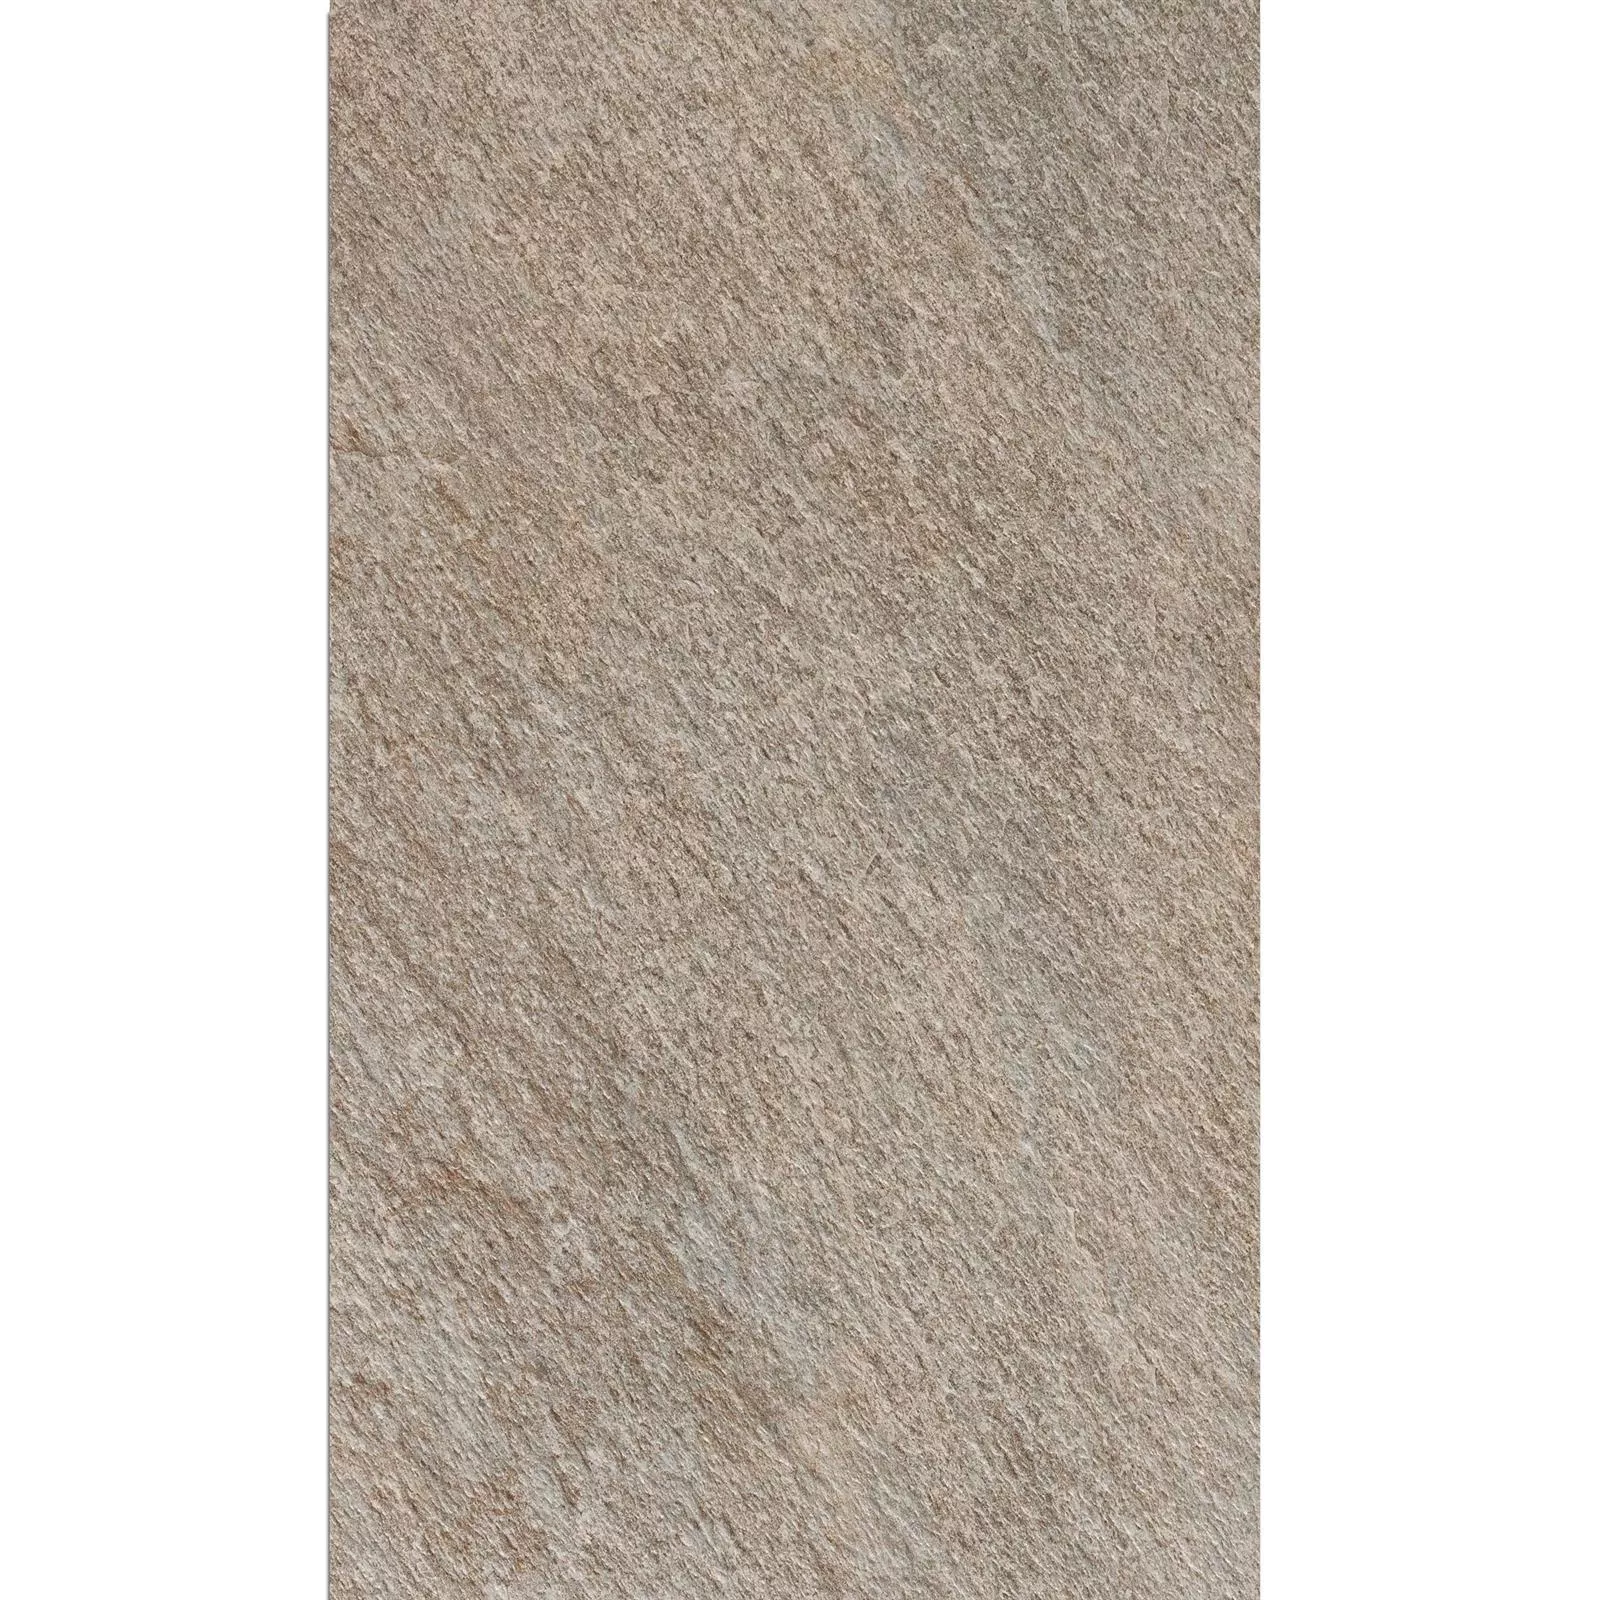 Sample Terrace Tiles Stoneway Natural Stone Optic Grey 60x90cm